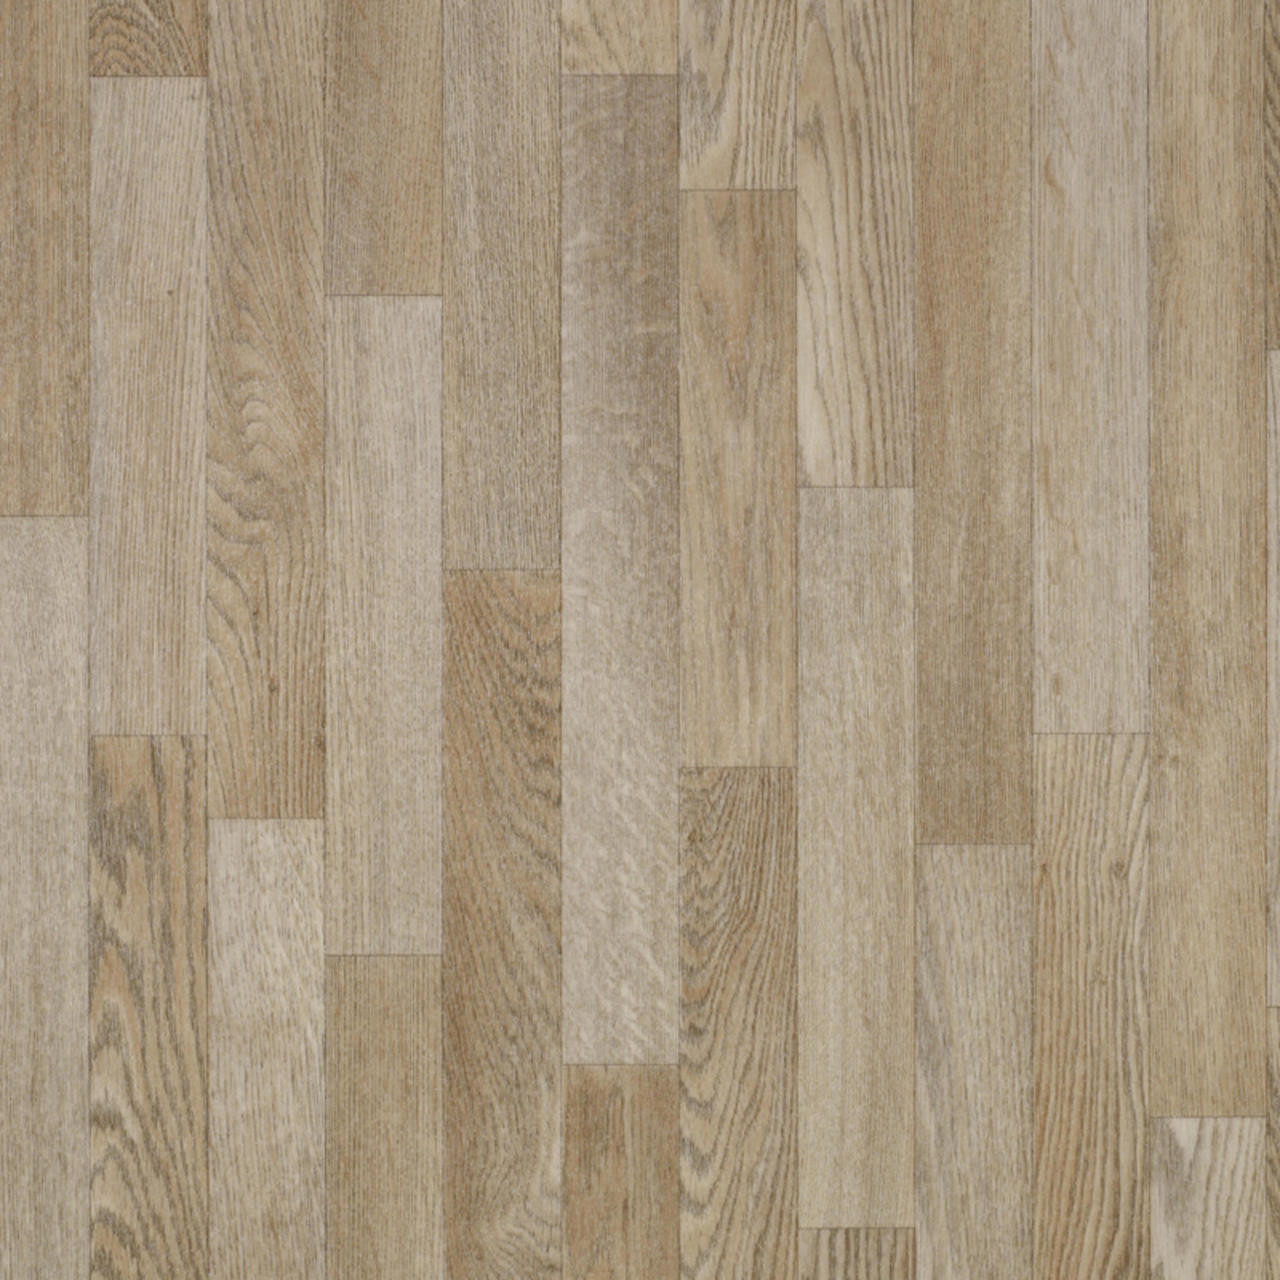 Tarkett Safetred Wood Trend Oak White Floormart Co Uk